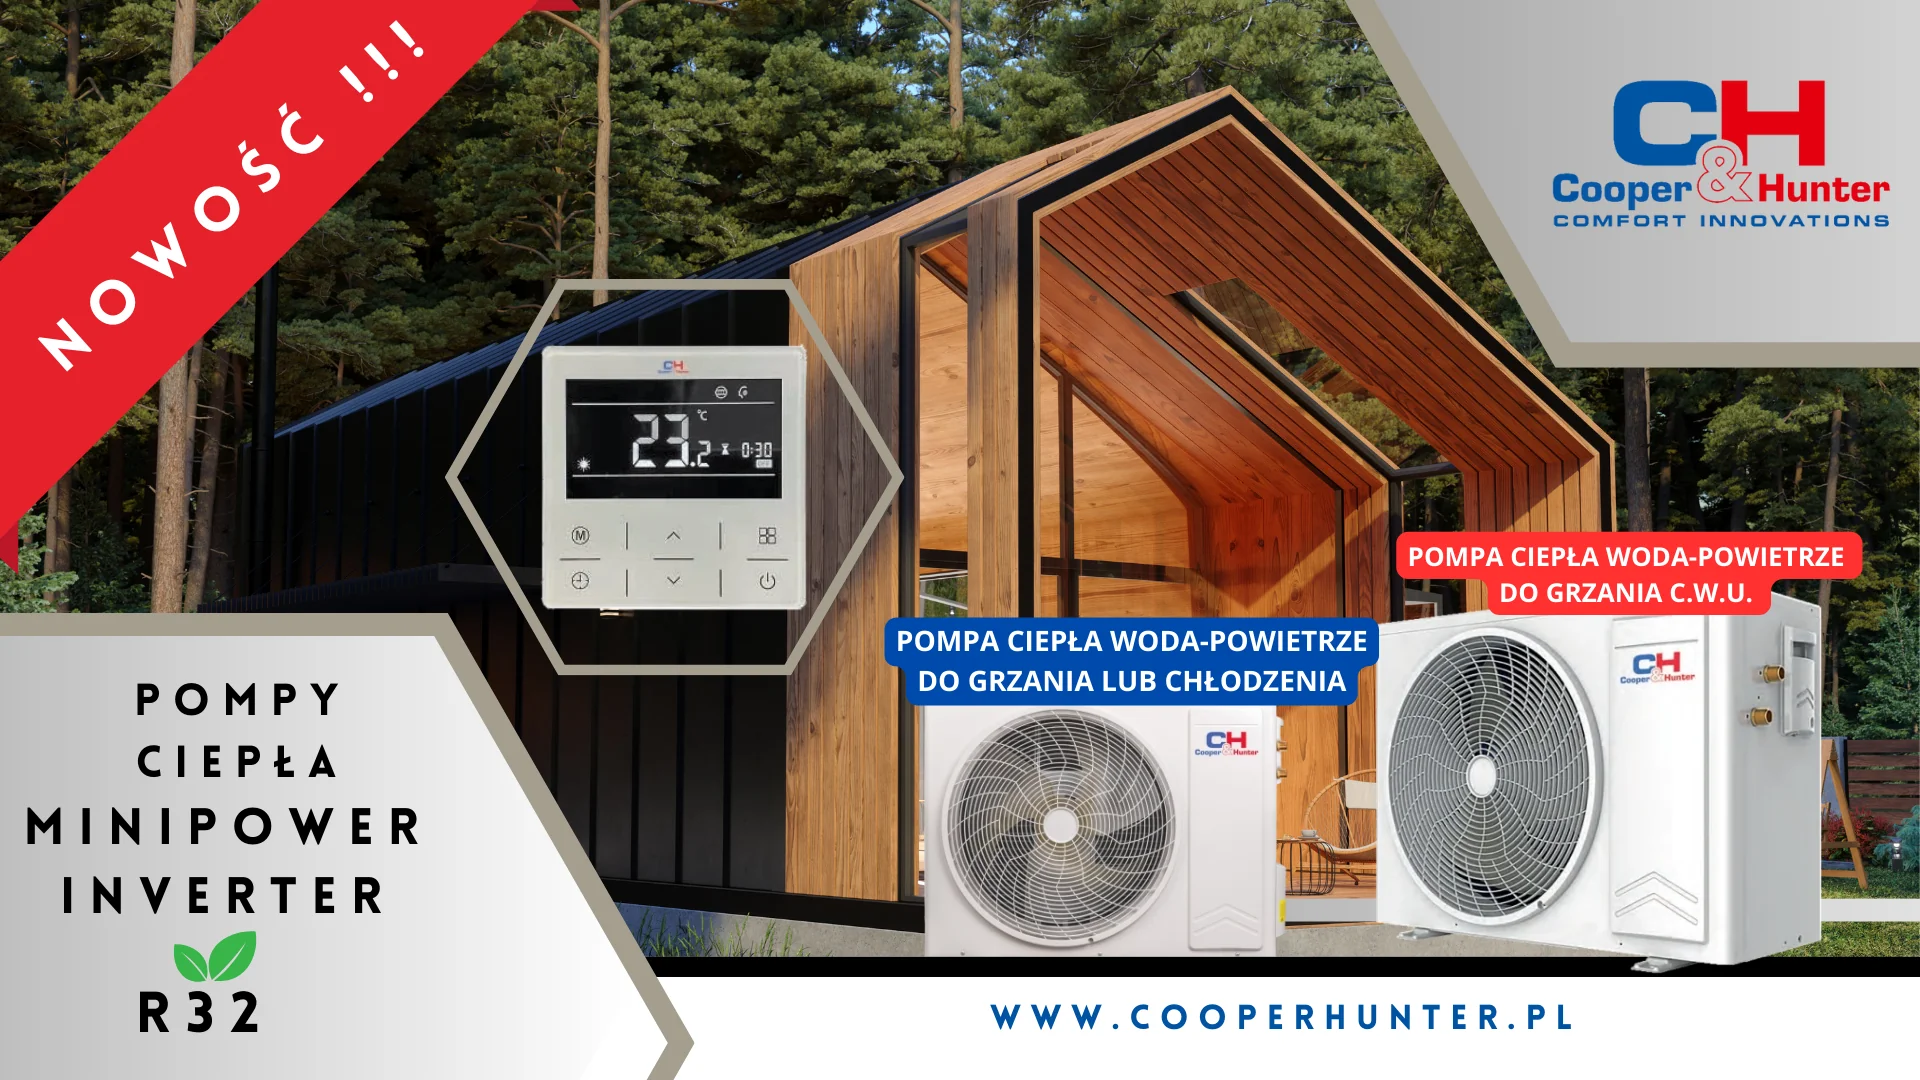 Nowe, kompaktowe pompy ciepła od Cooper&Hunter